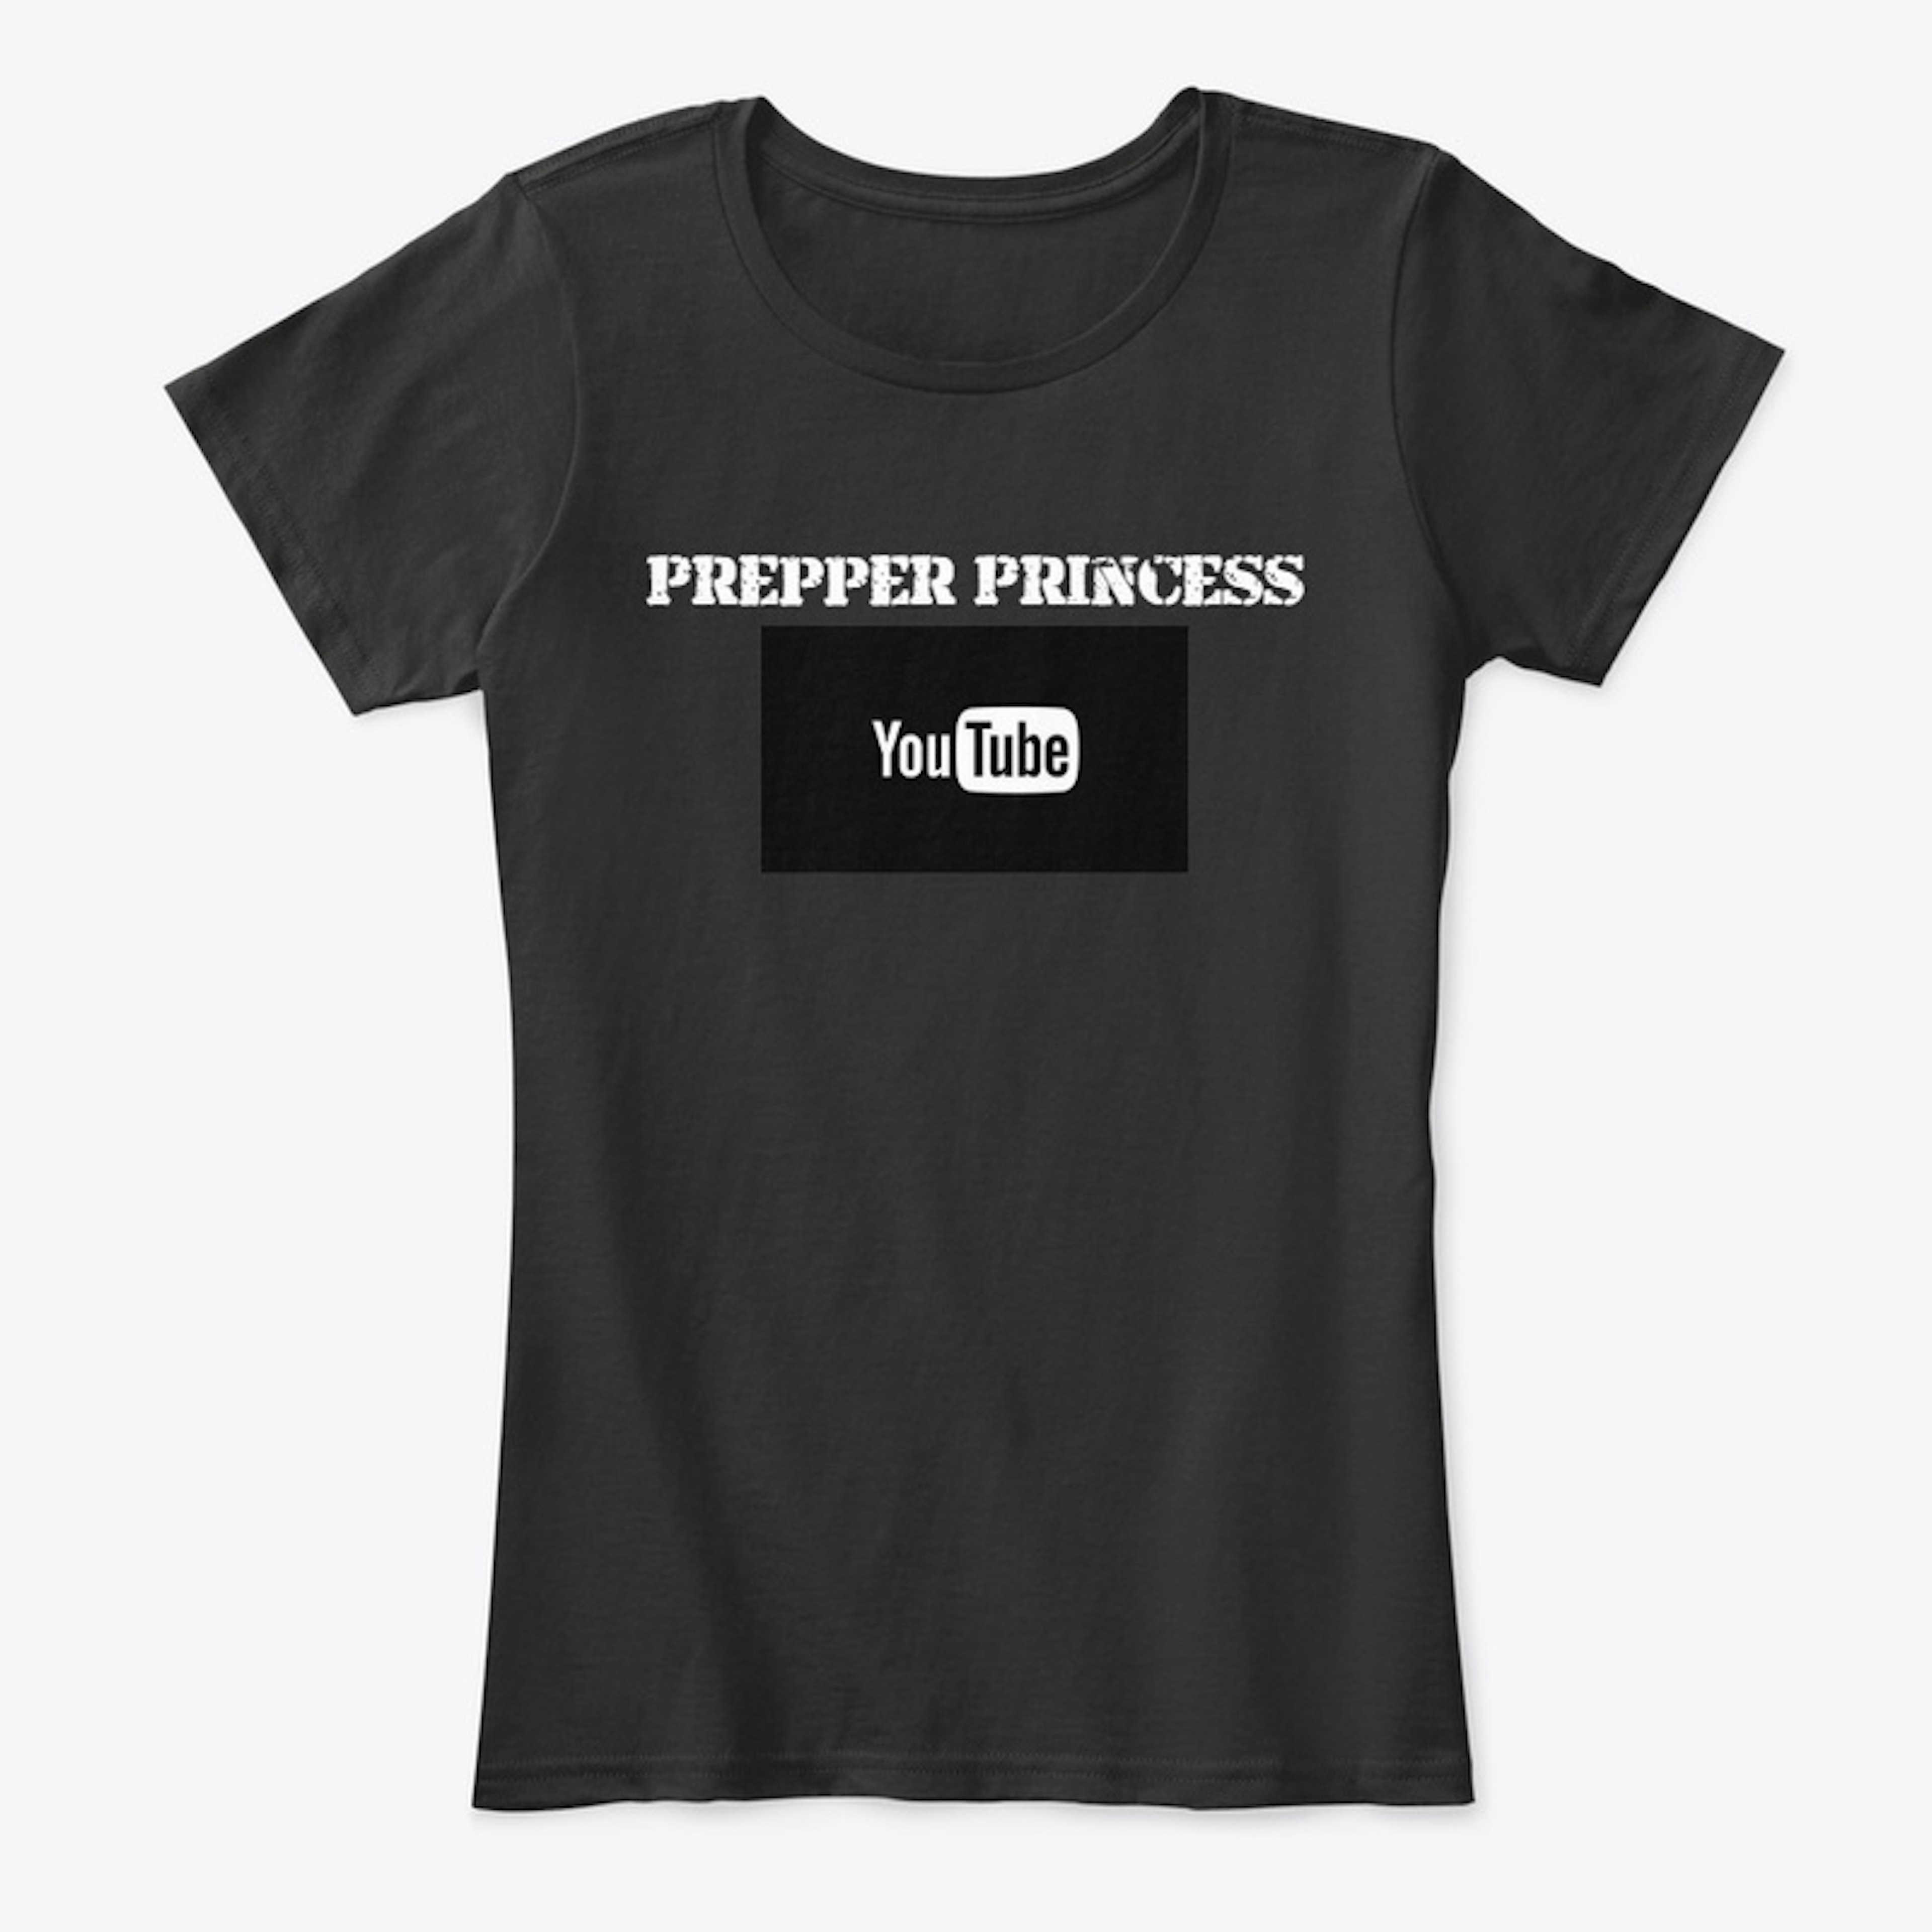 Prepper Princess Black T-shirt